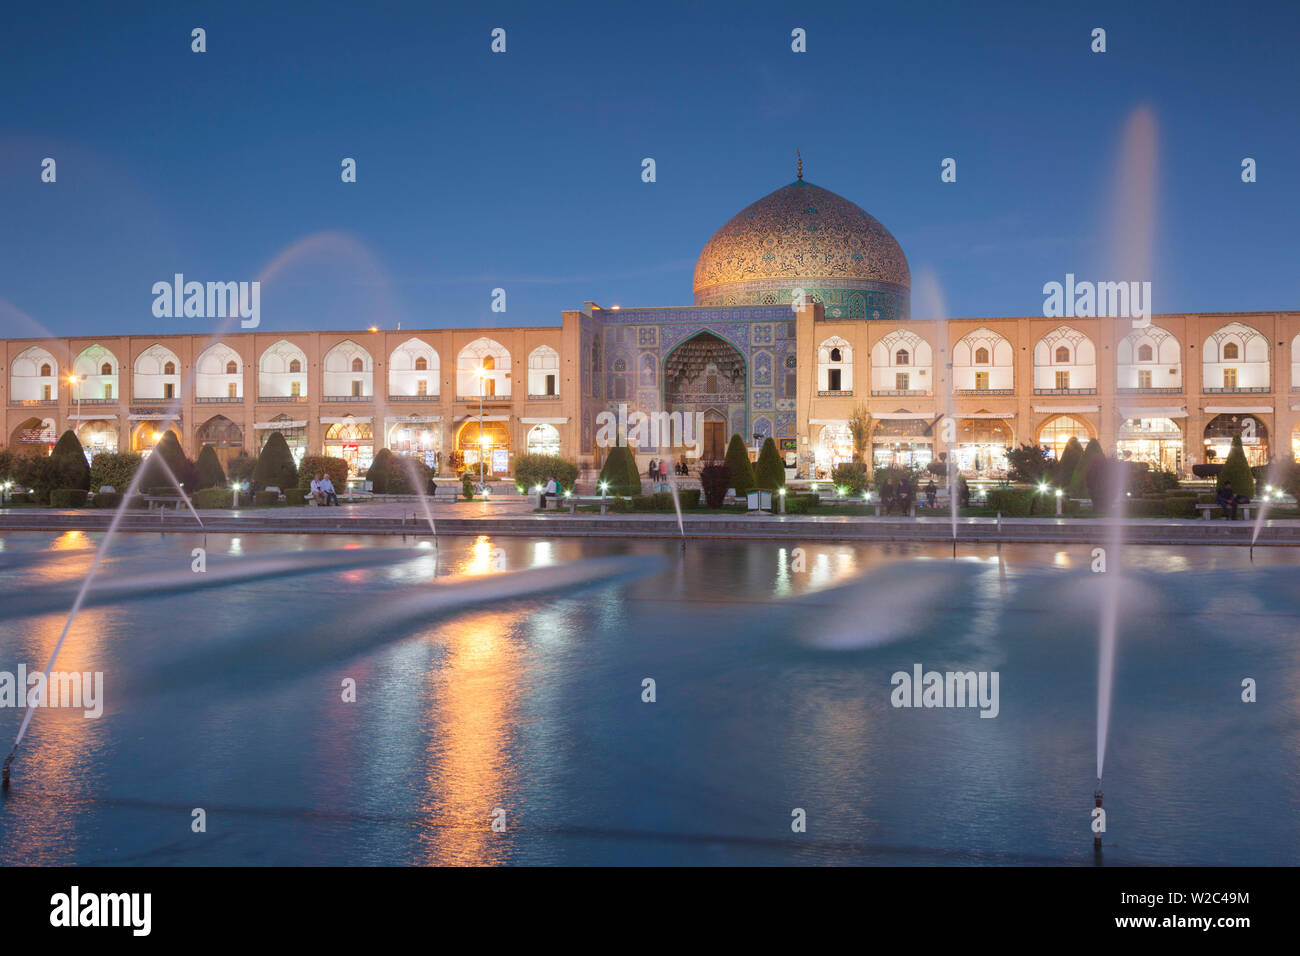 Iran, Central Iran, Esfahan, Naqsh-e Jahan Imam Square, dusk Stock Photo